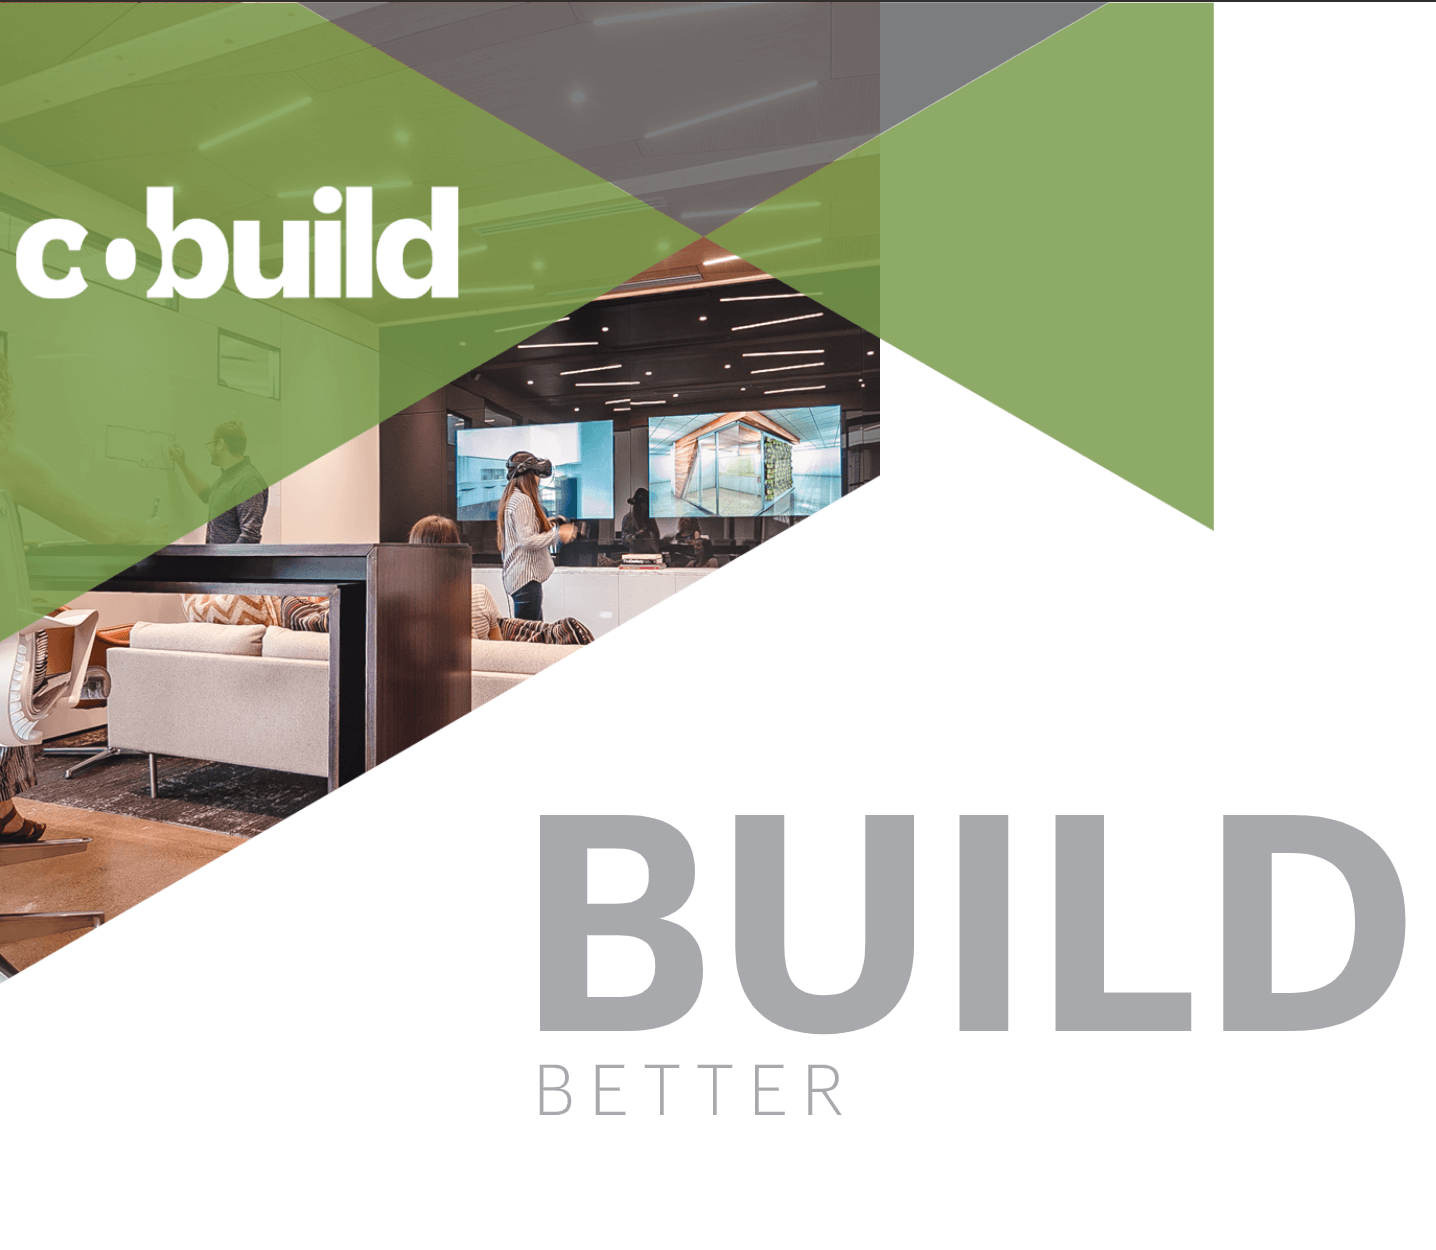 Builditbetter-ebook-coBuild (2)